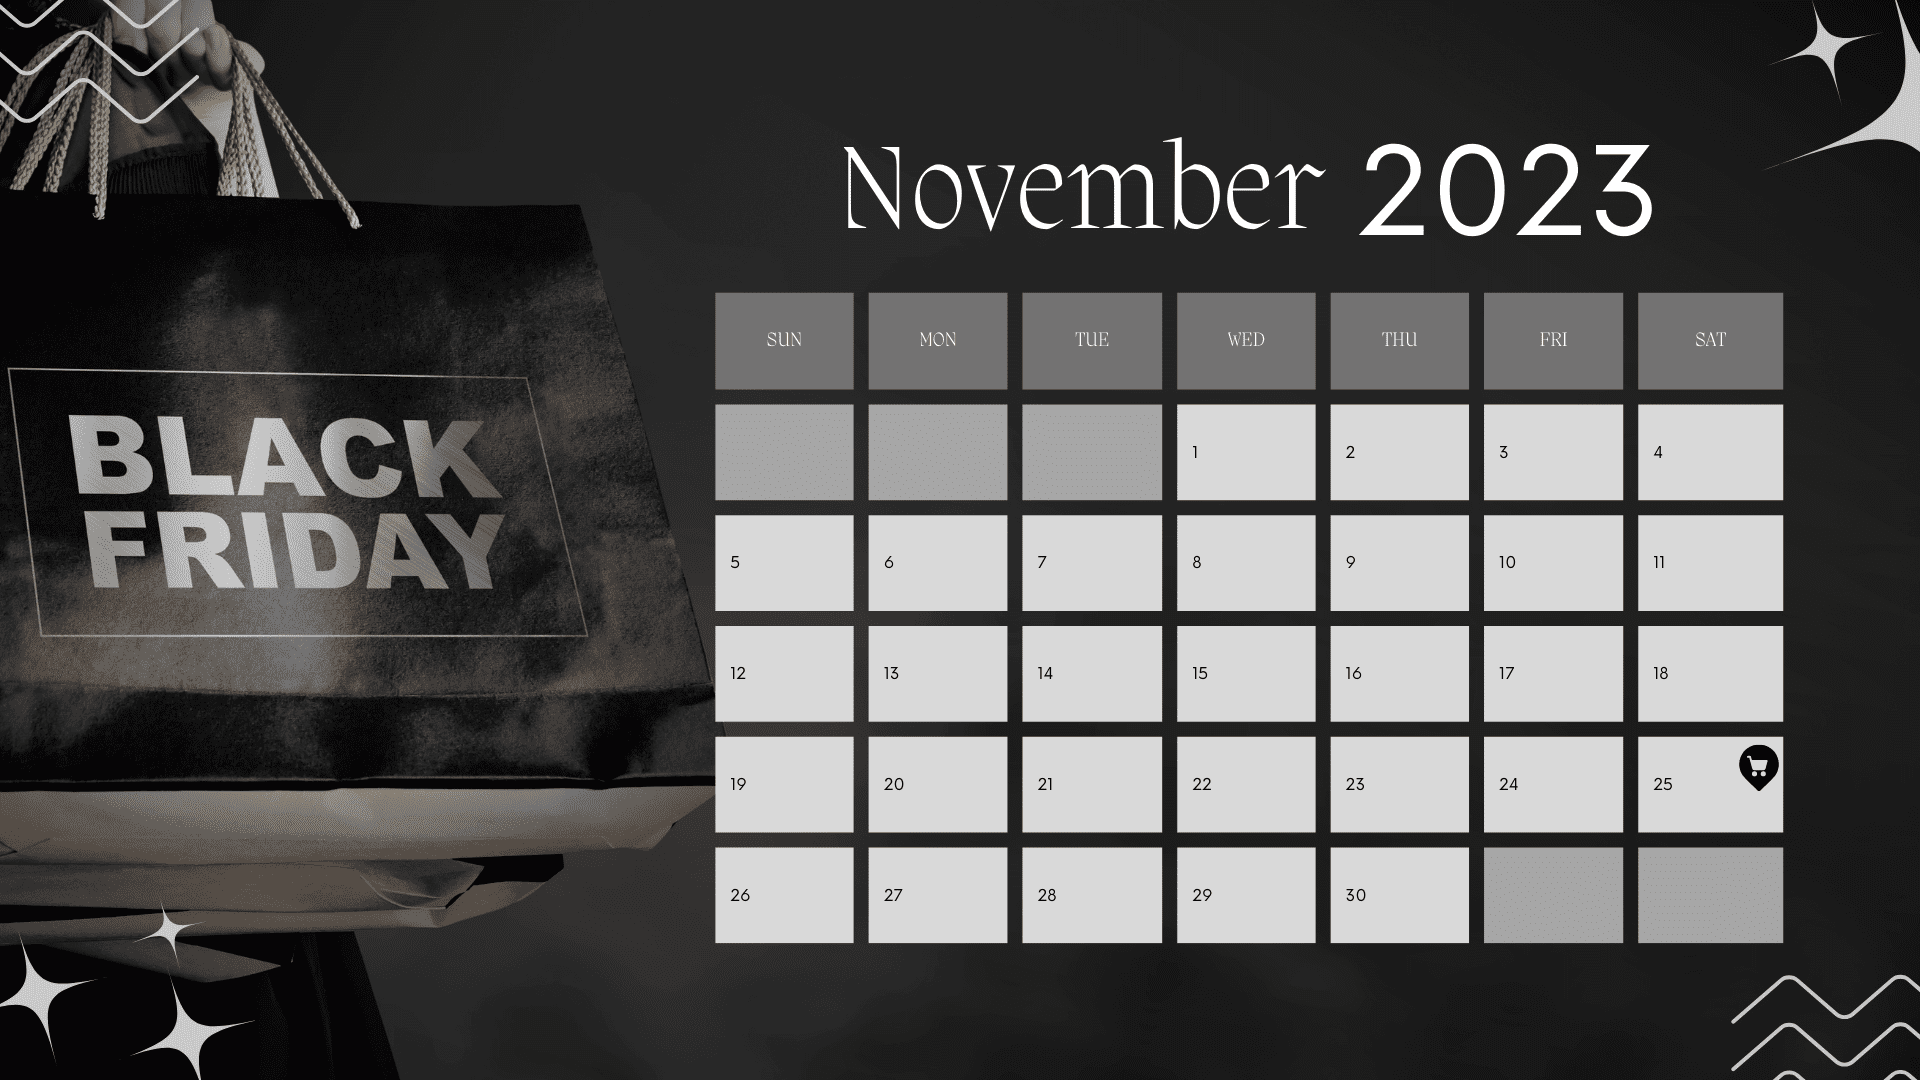 November 2023 Holidays Calendar Printable